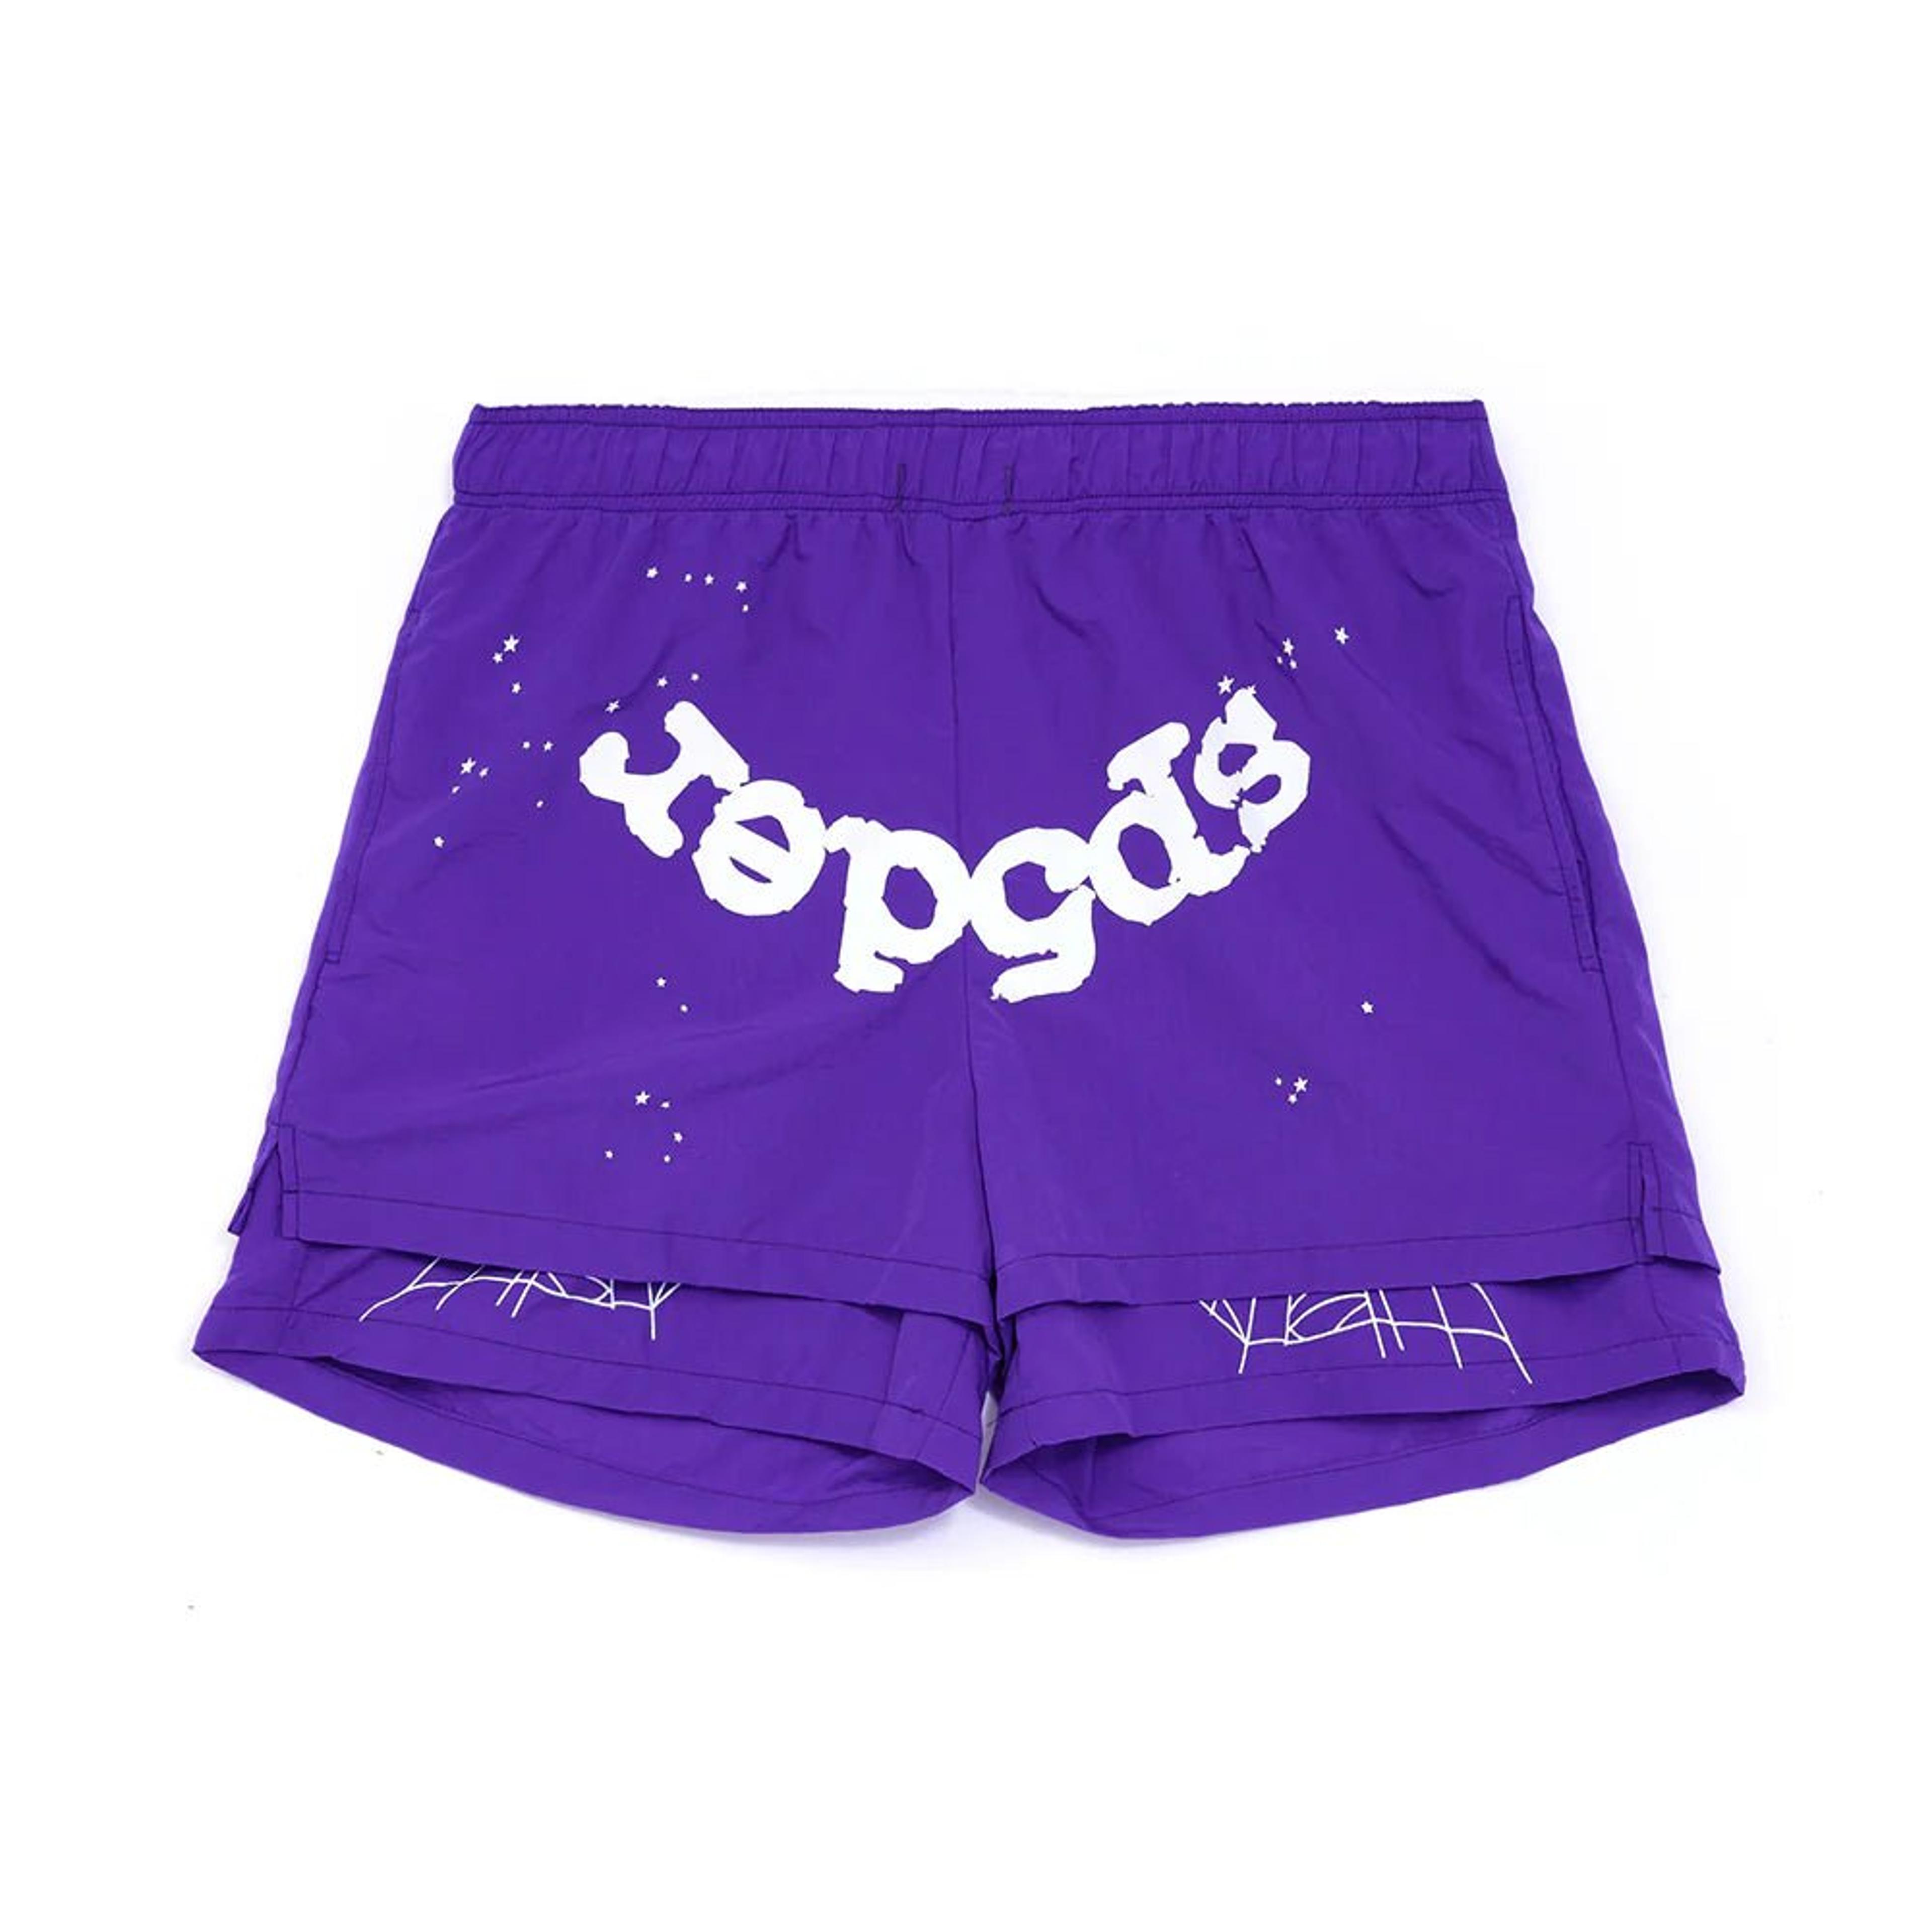 Sp5der Grape Logo Shorts